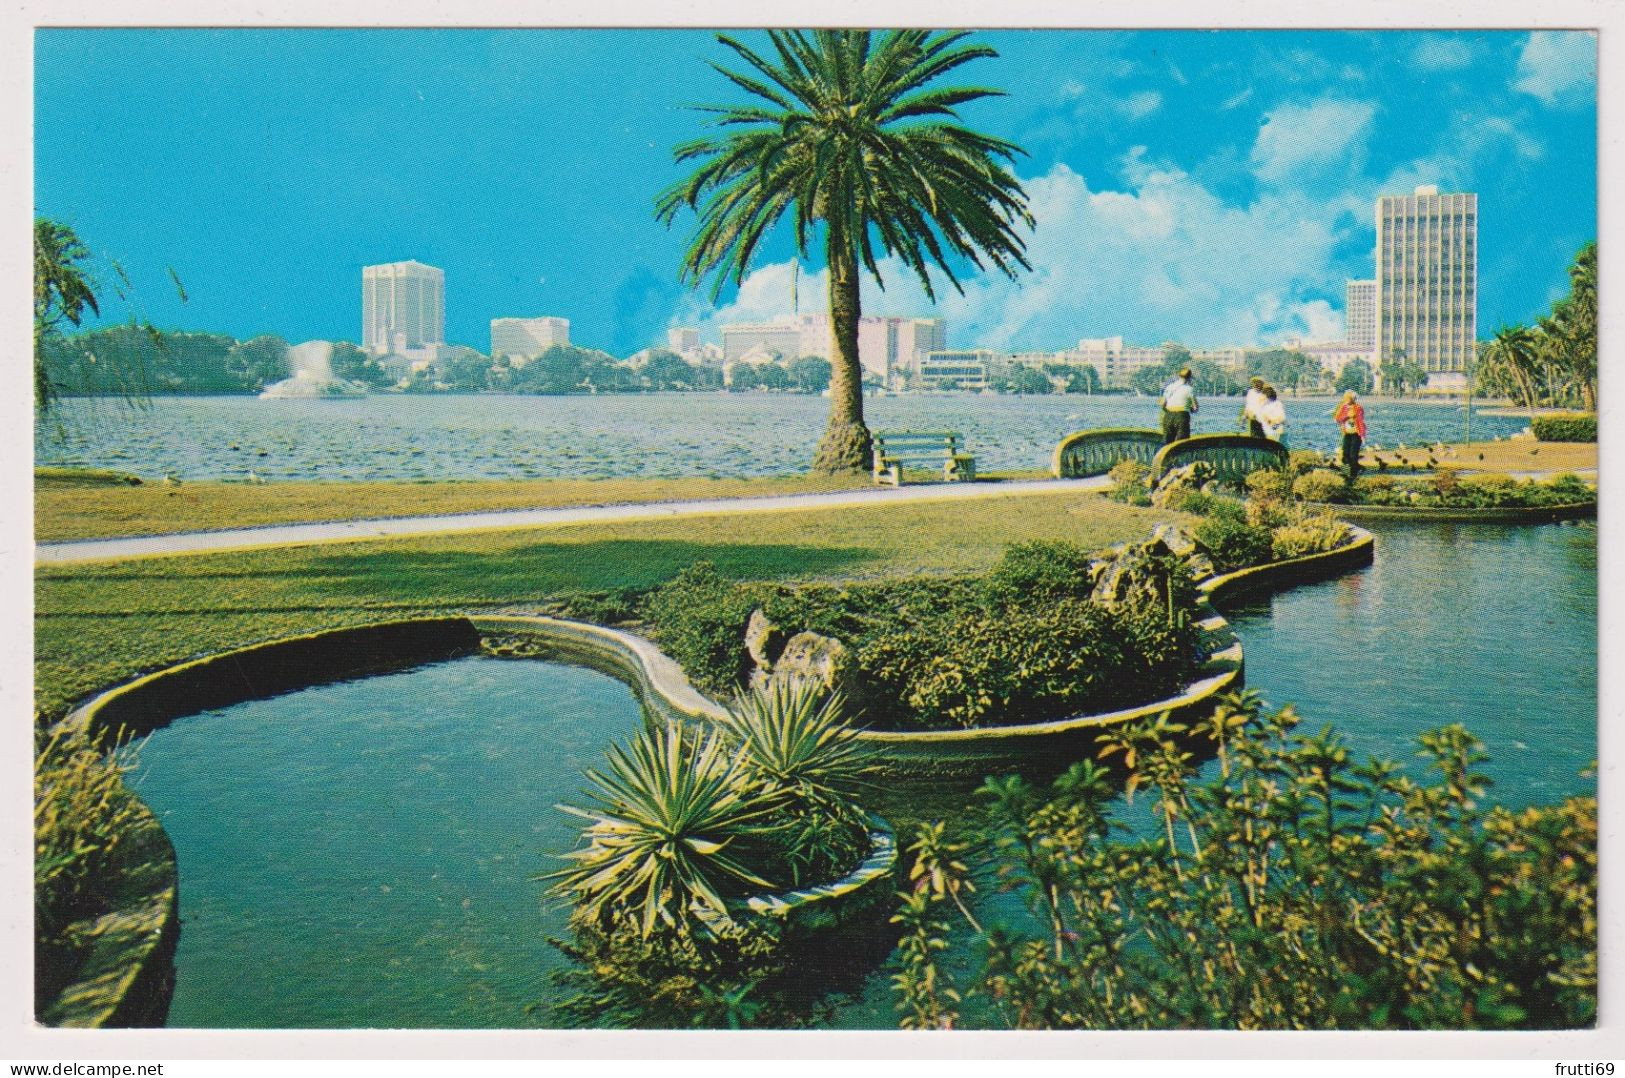 AK 197956 USA - Florida - Orlando - Orlando